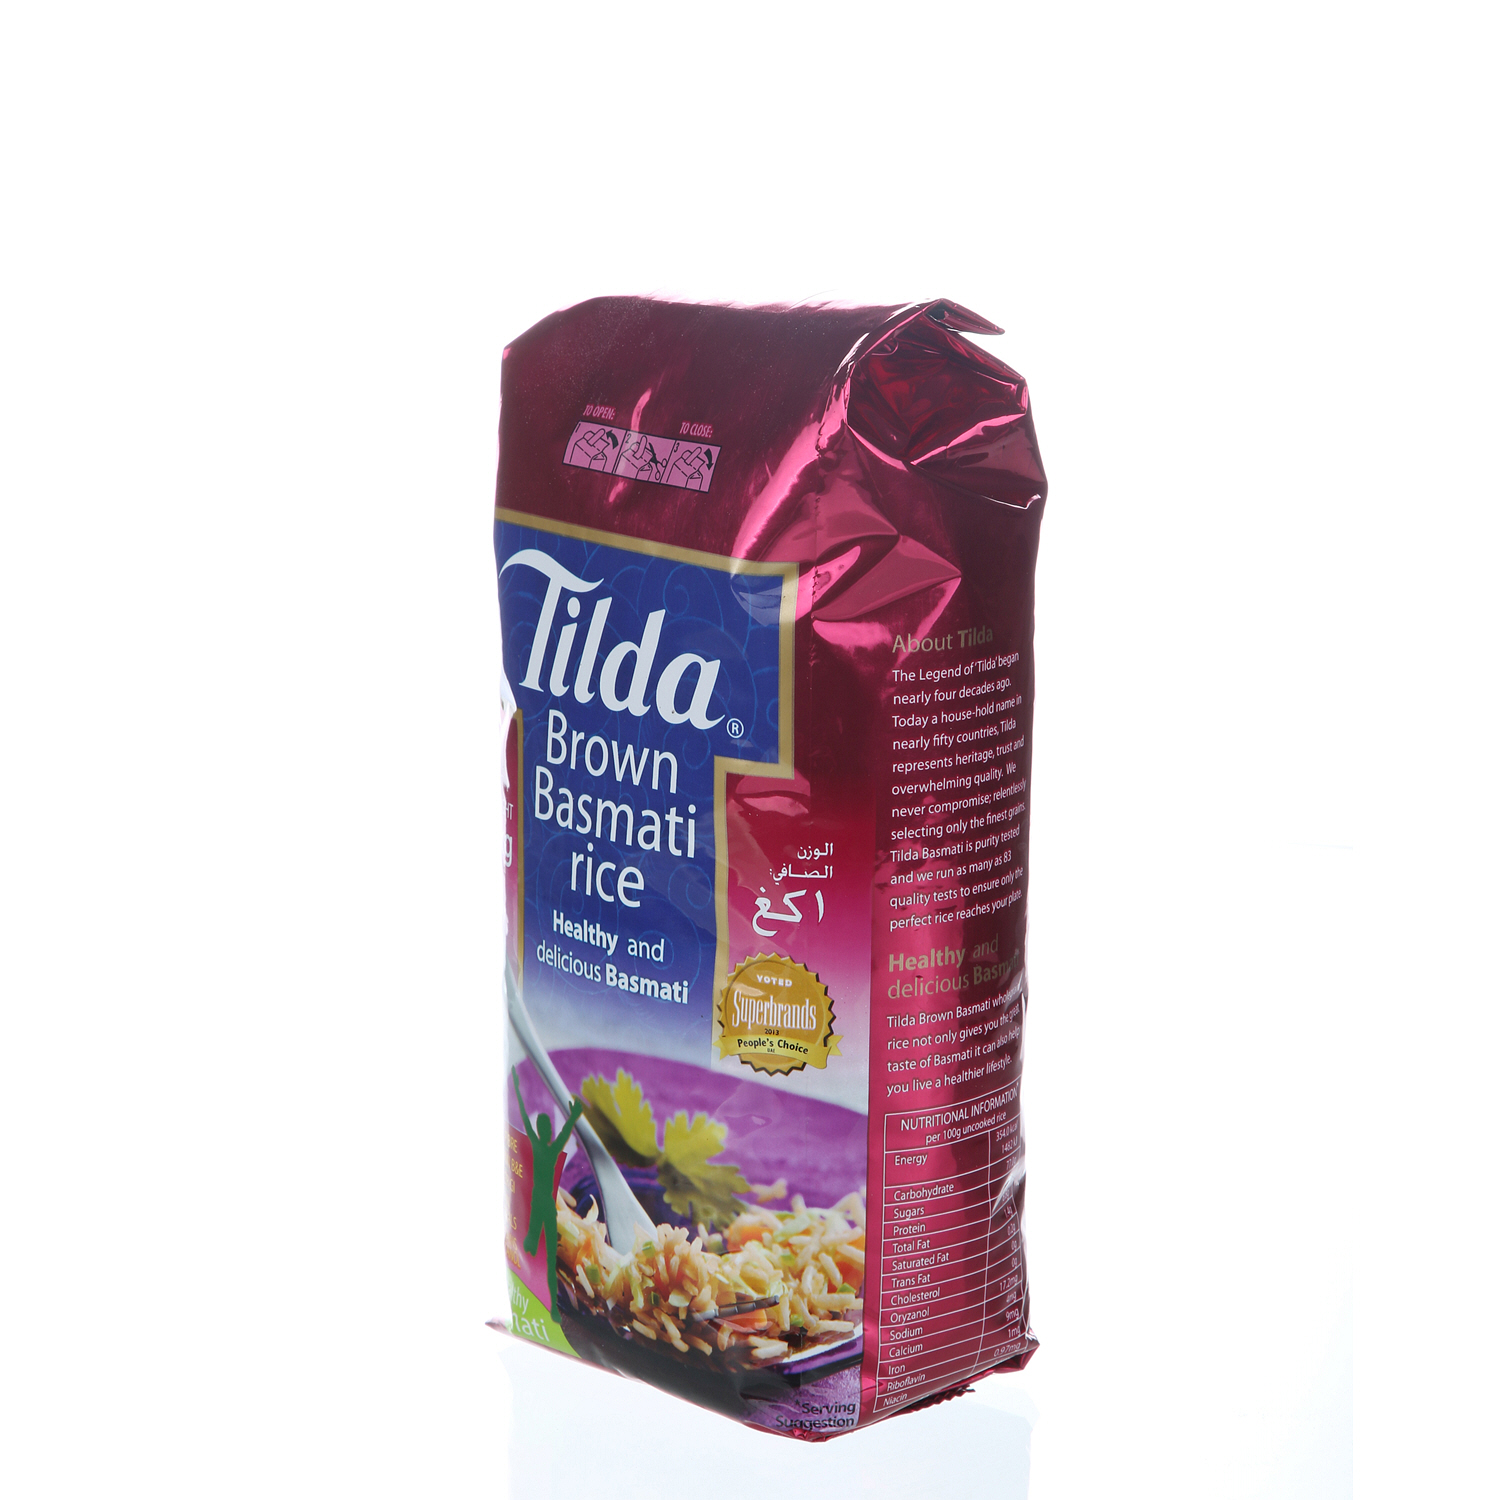 Tilda Brown Basmati Rice 1Kg